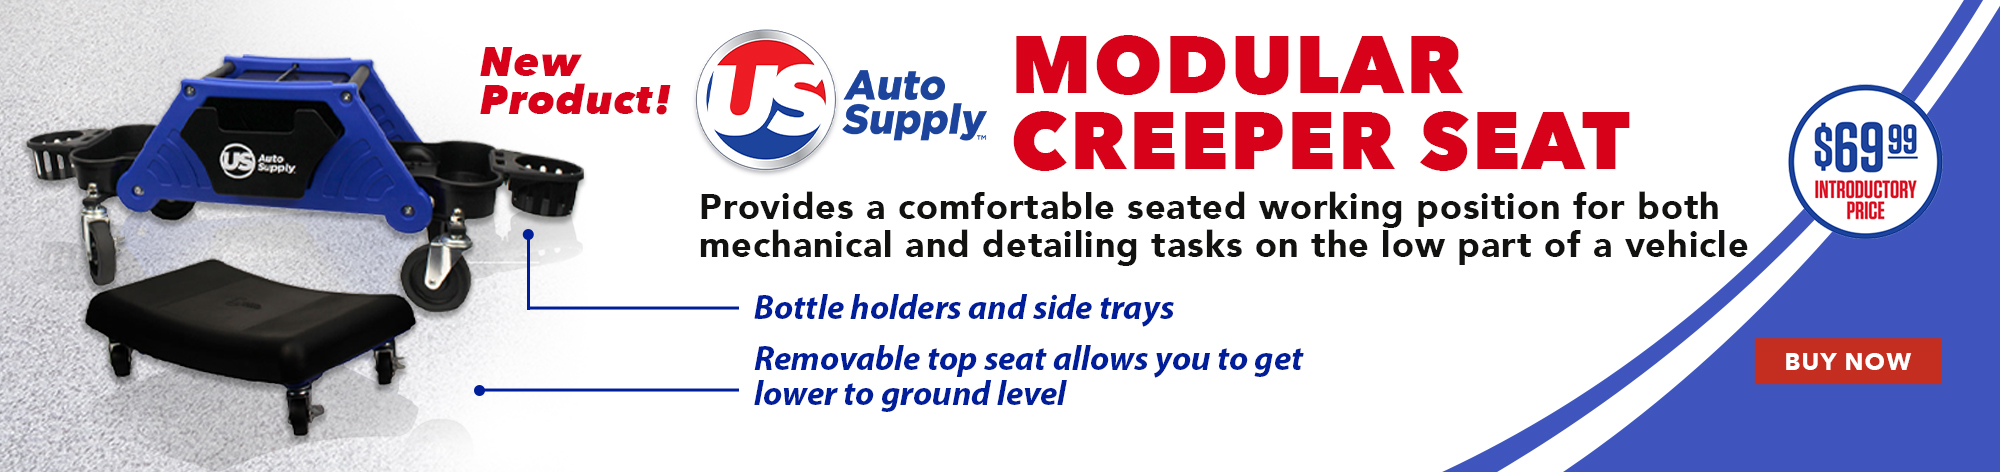 New! US Auto Supply Modular Creeper Seat